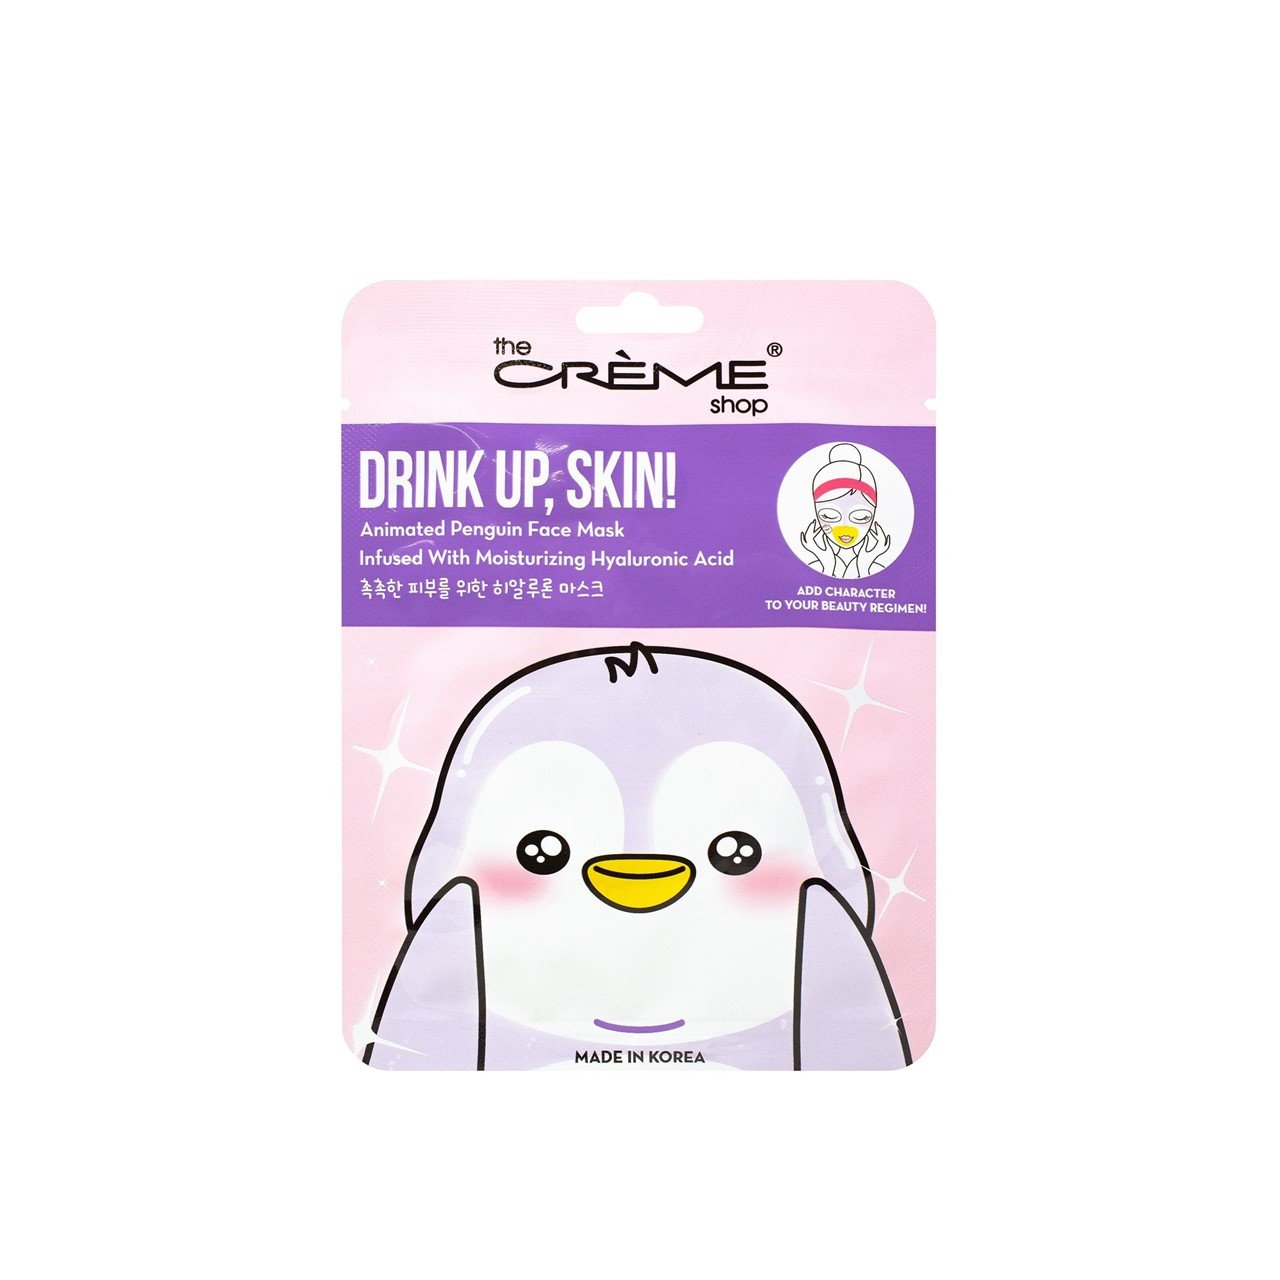 The Crème Shop Drink Up, Skin! Animated Penguin Face Mask 25g